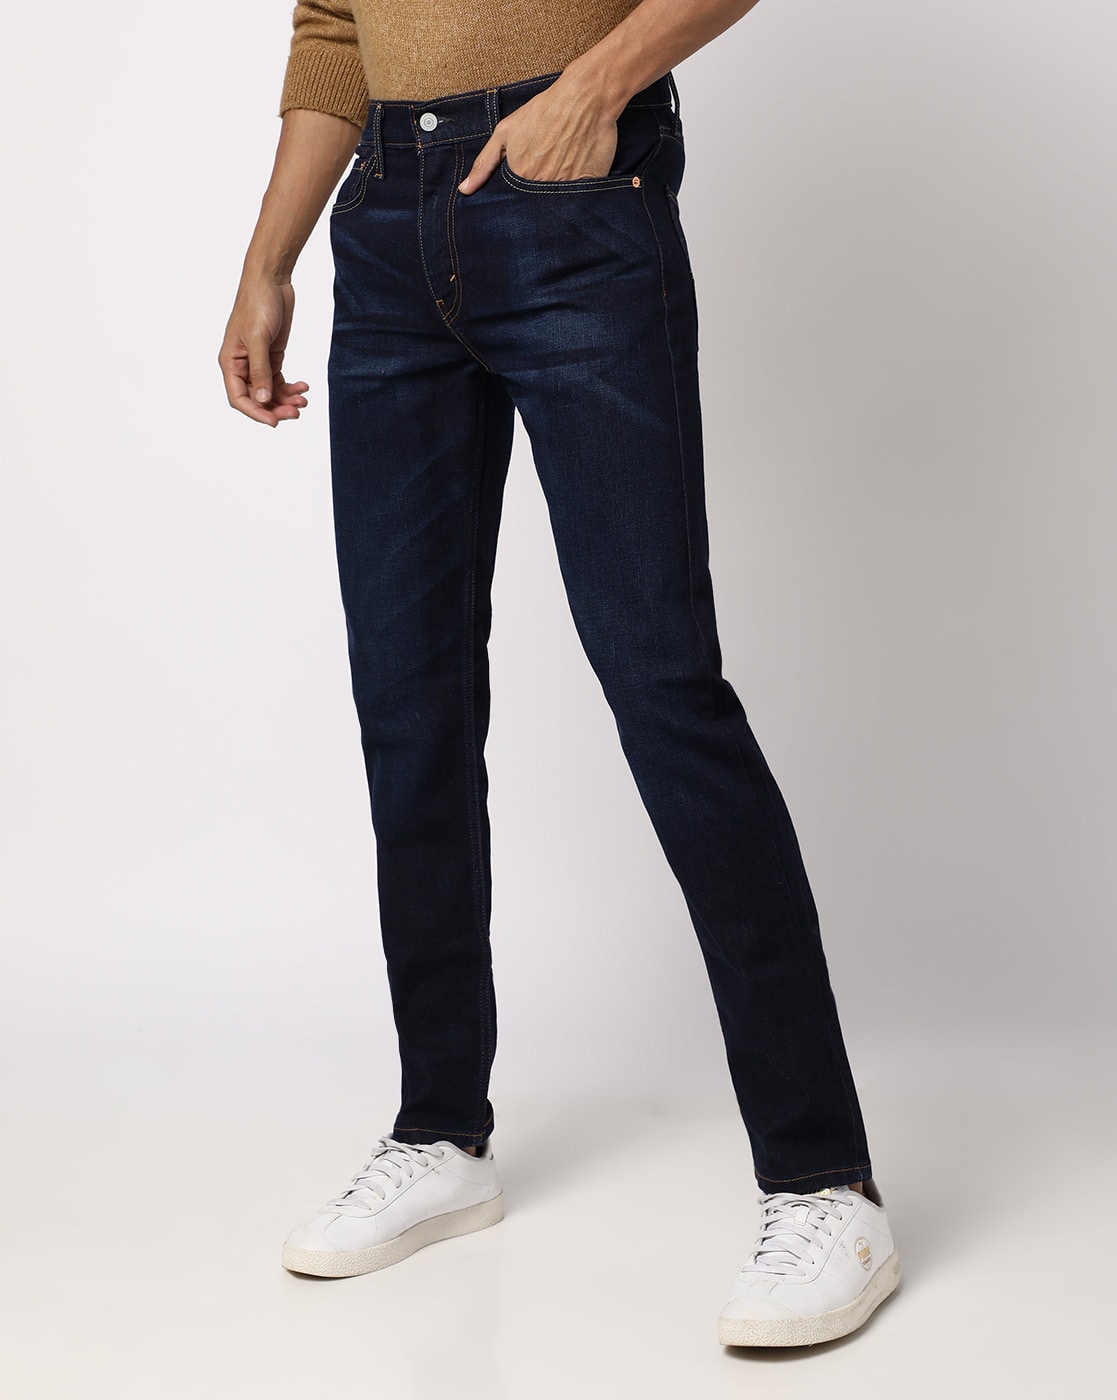 Buy Green Trousers  Pants for Men by LEVIS Online  Ajiocom